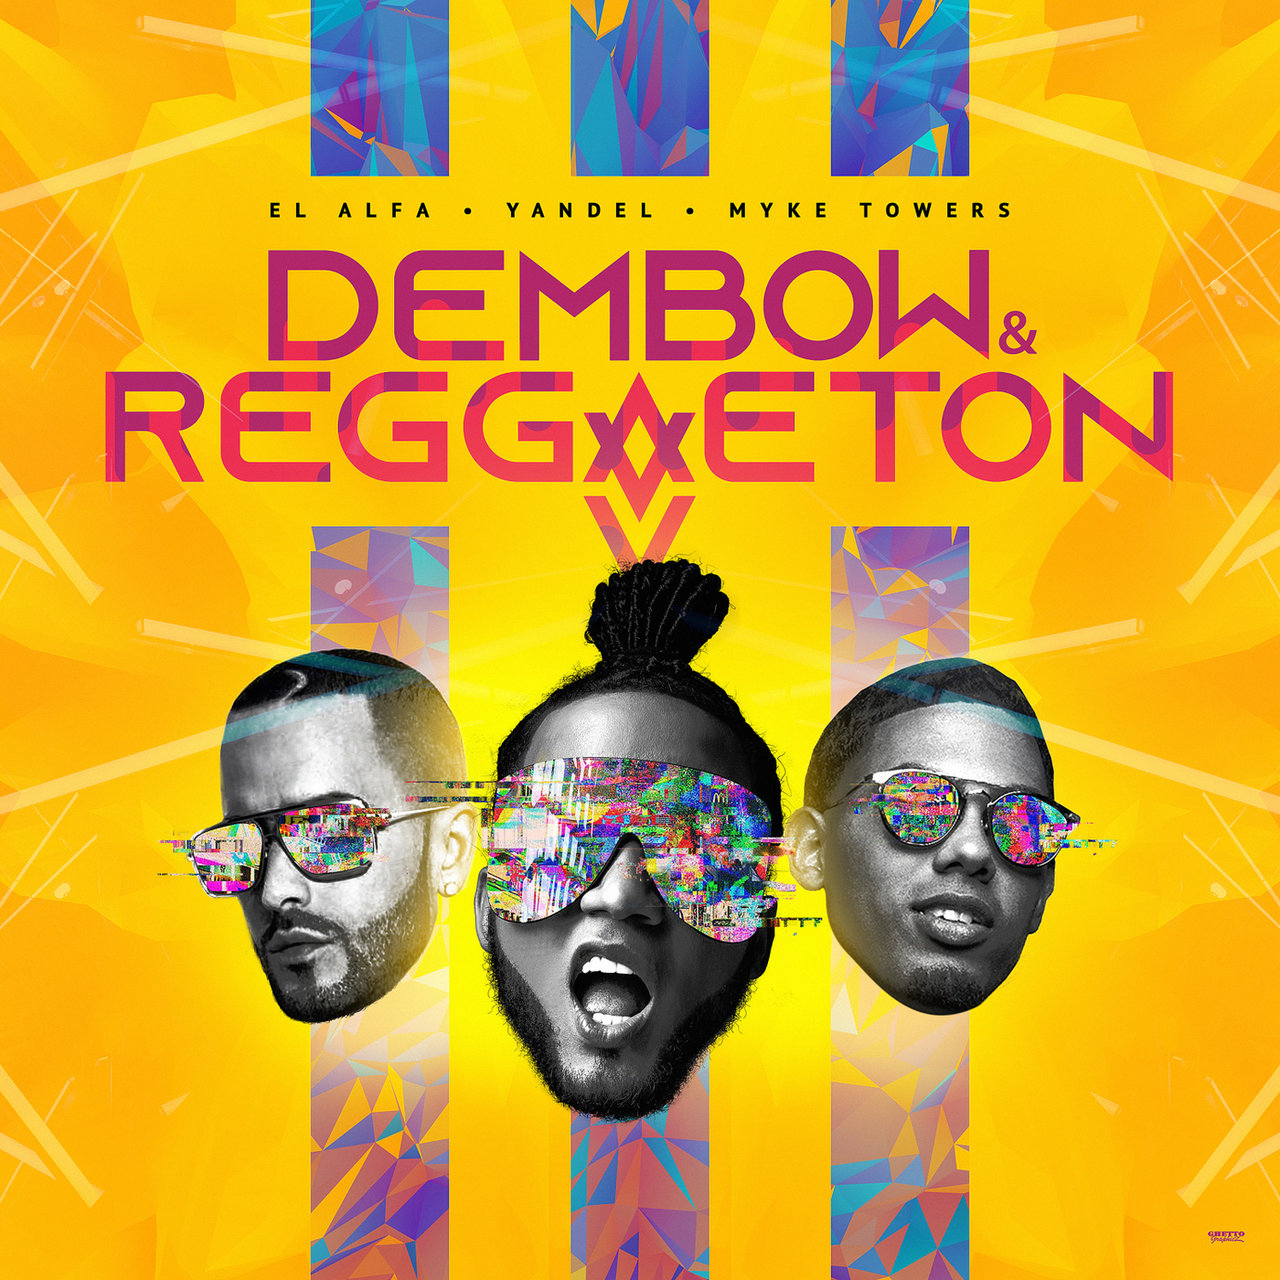 El Alfa, Yandel, & Myke Towers — Dembow y Reggaeton cover artwork